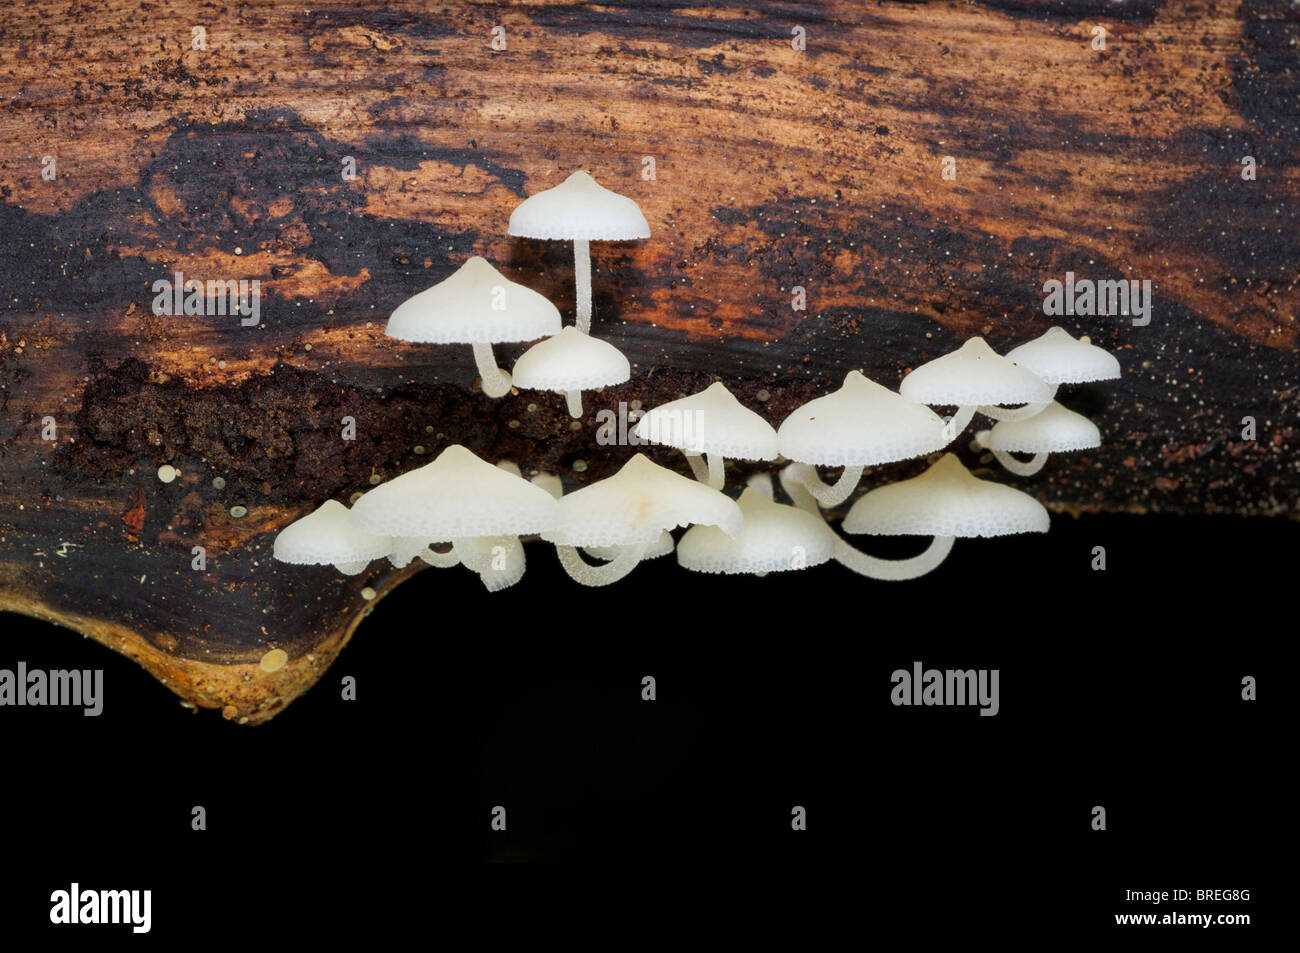 A Marasmiaceae fungi growing on decaying trees at Khao Pla Ra in Uthai Thani, Thailand. Stock Photo